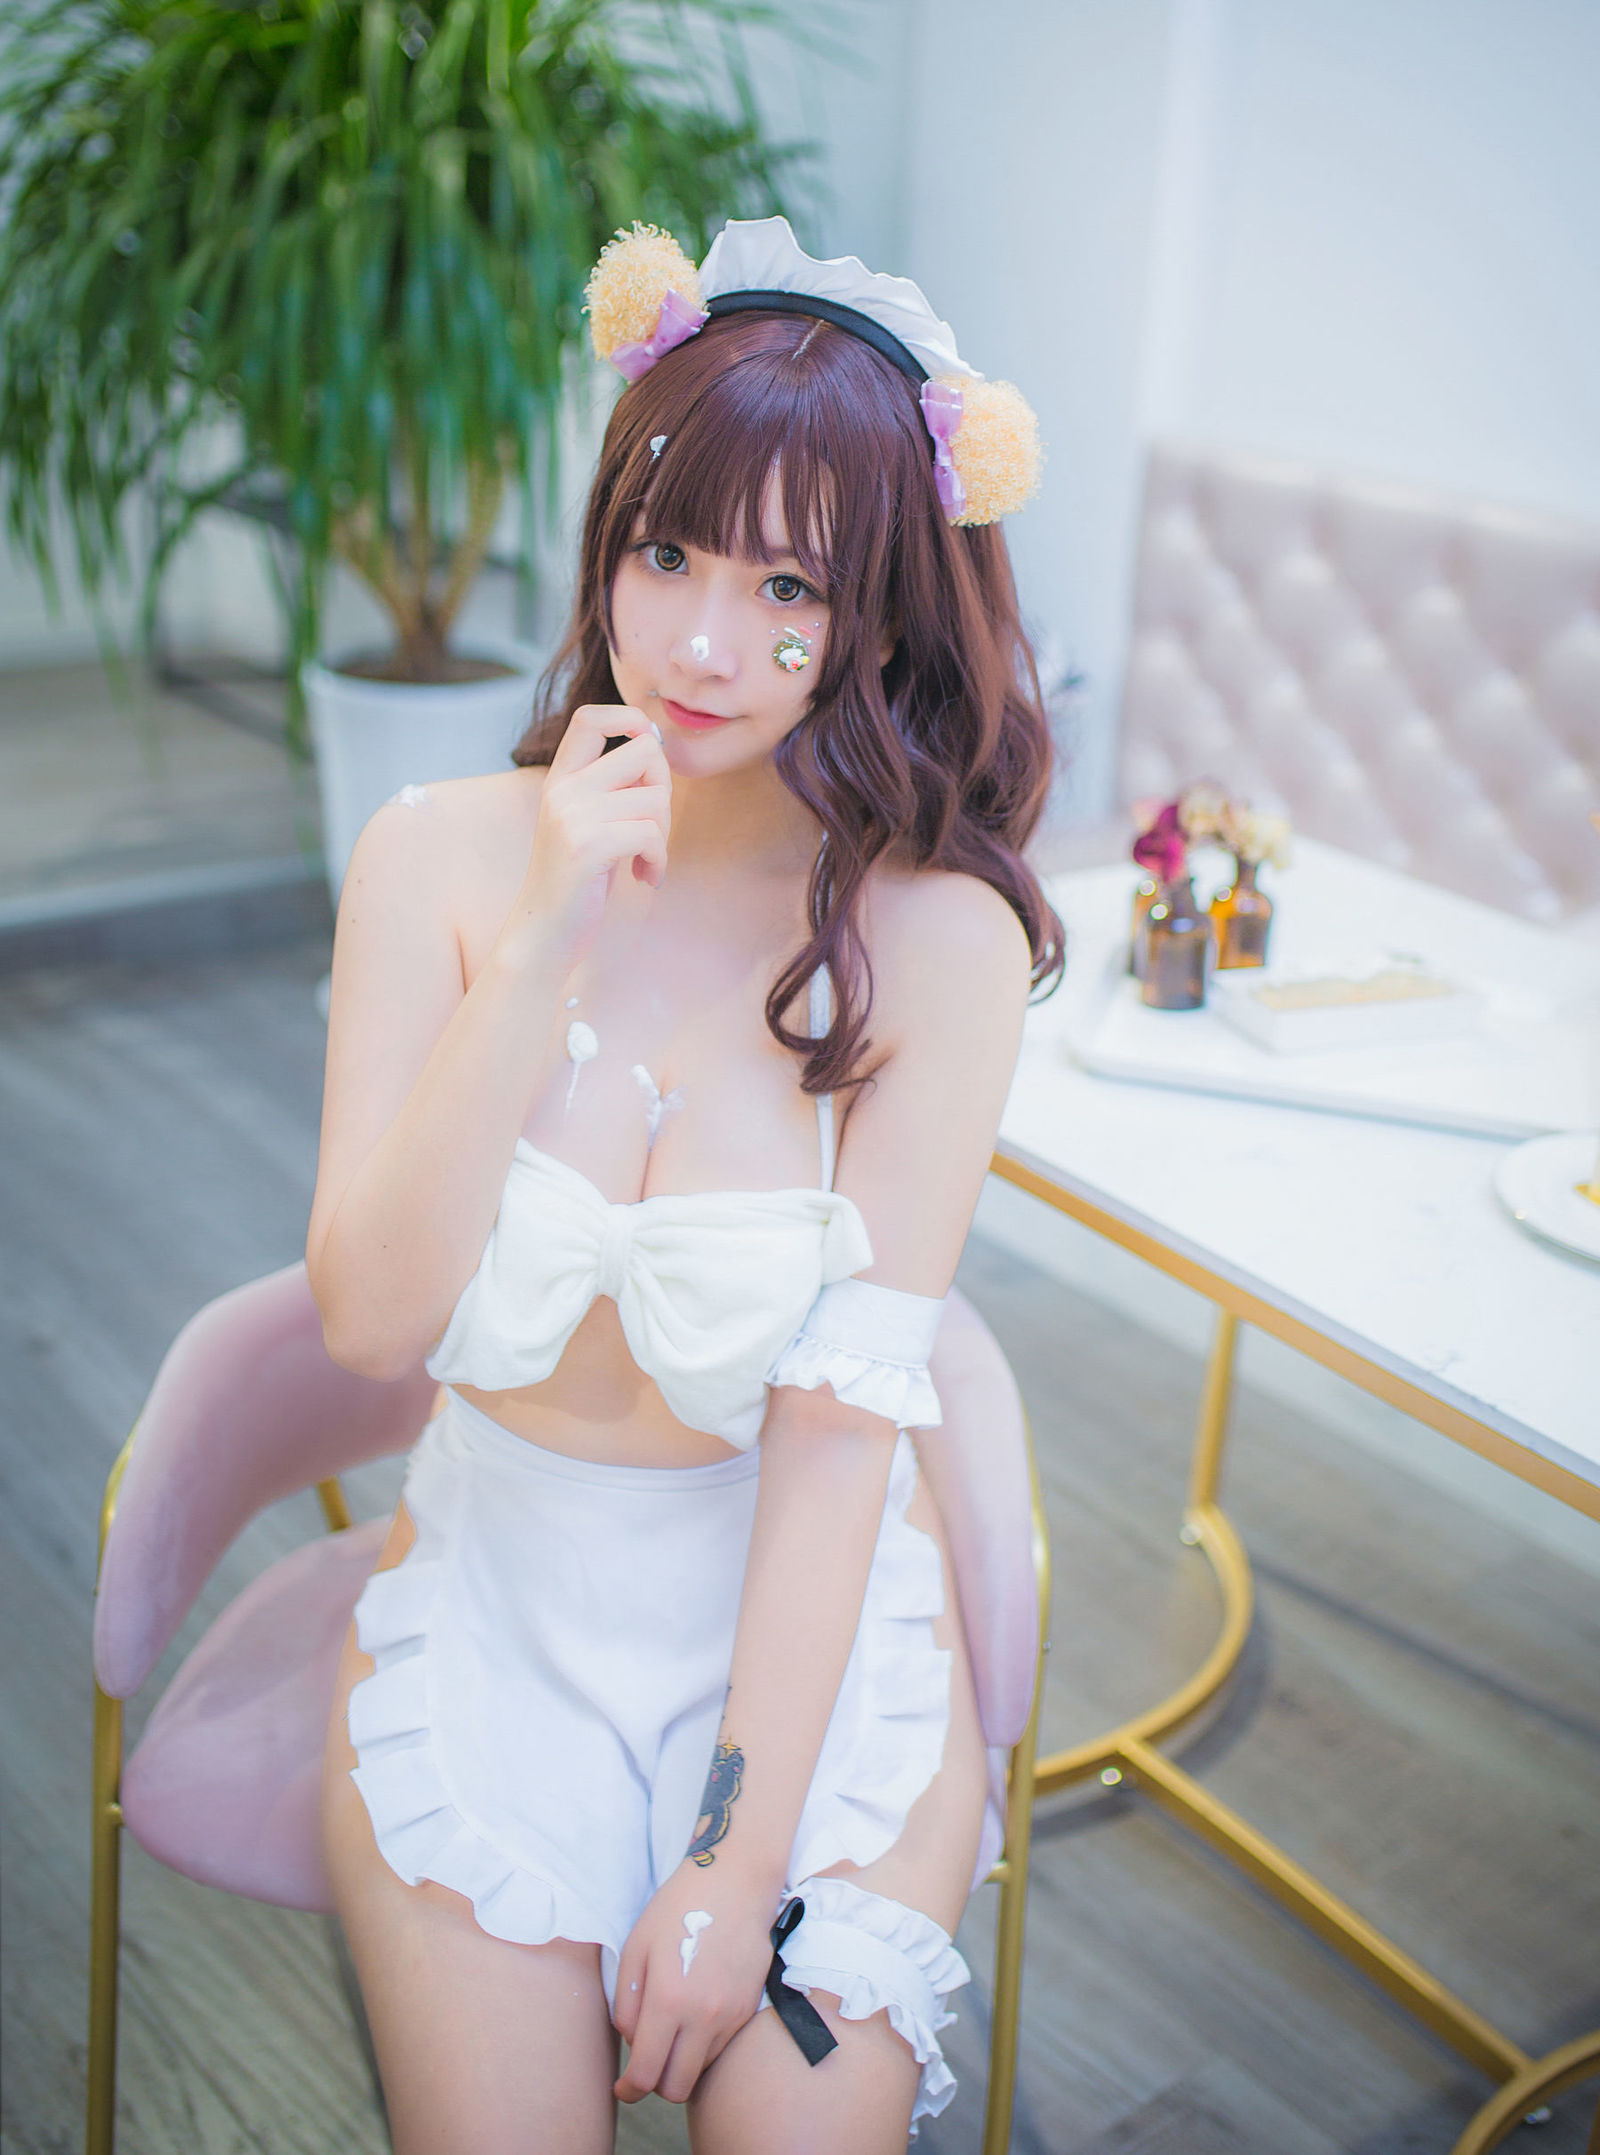 [CosPlay美女] 巨乳猫九酱Sakura - 兽の物语 写真套图3 